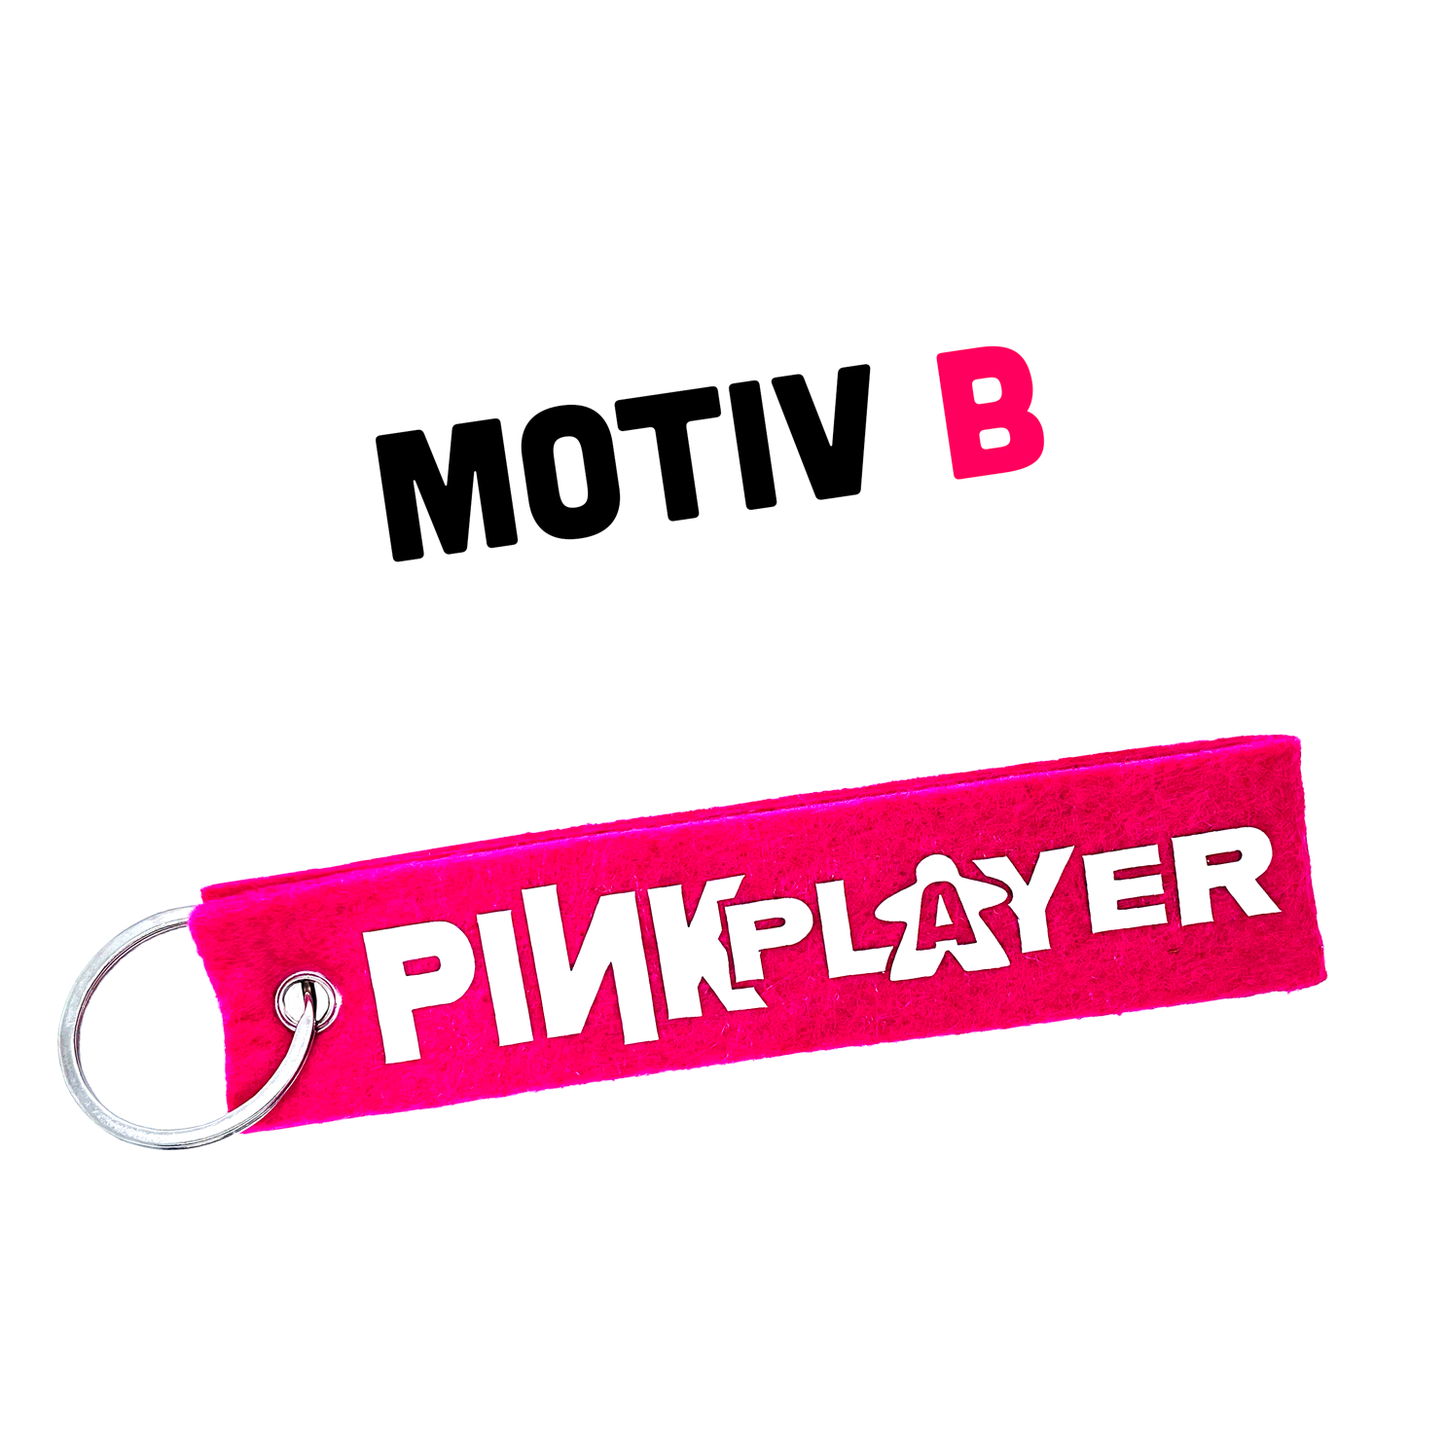 Key ring felt - Pink Player - player color pink